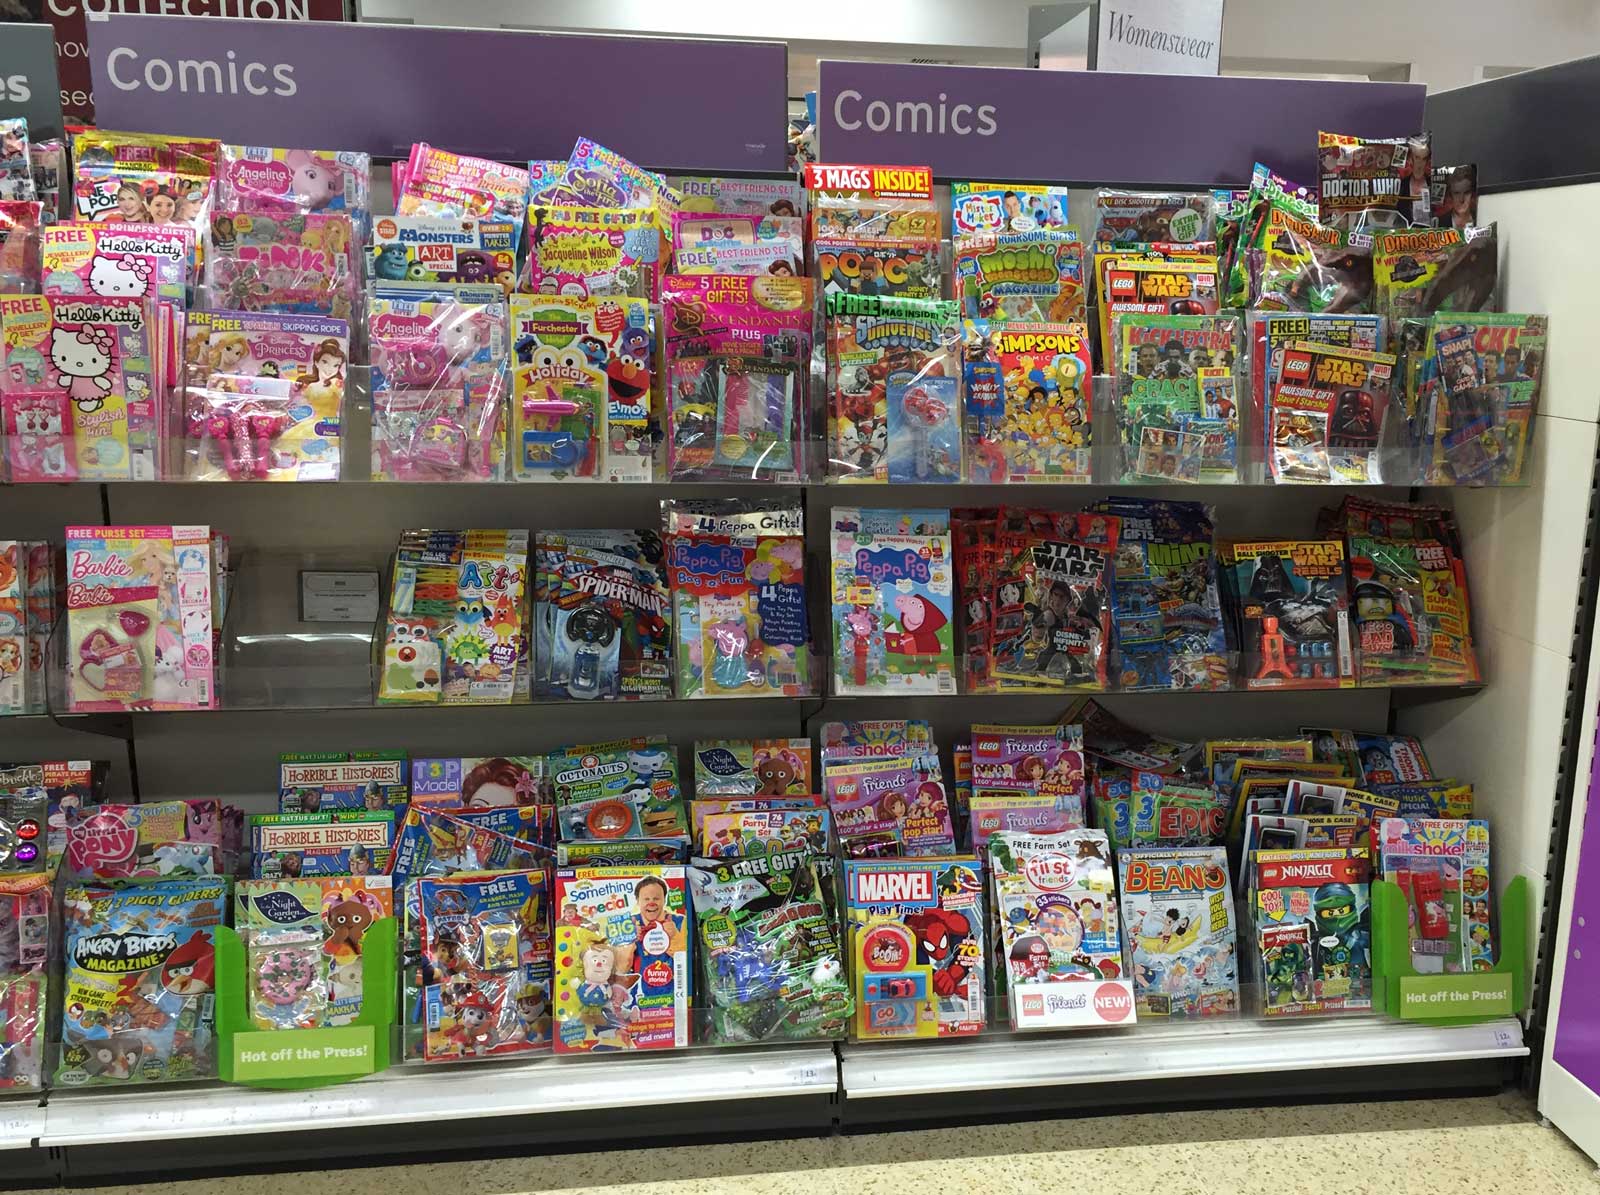 Sainsbury's Comics Section, Lancaster, 19th September 2015